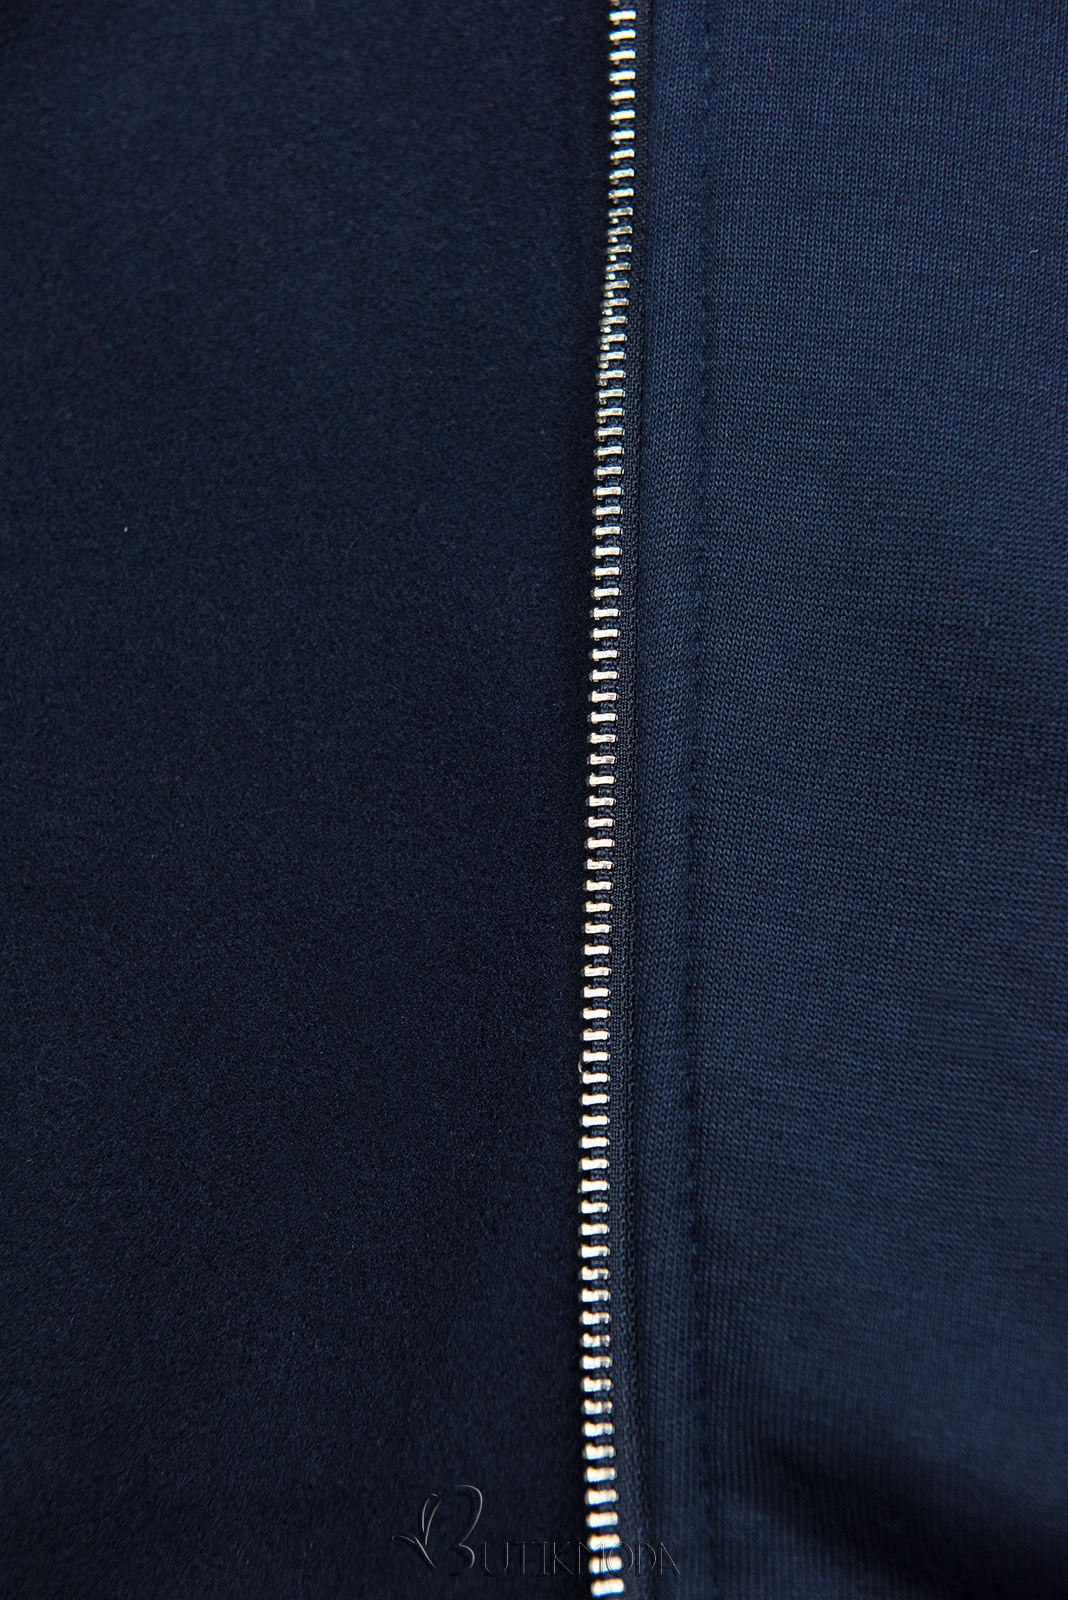 Sweatmantel in langer Form mit Kapuze dunkelblau